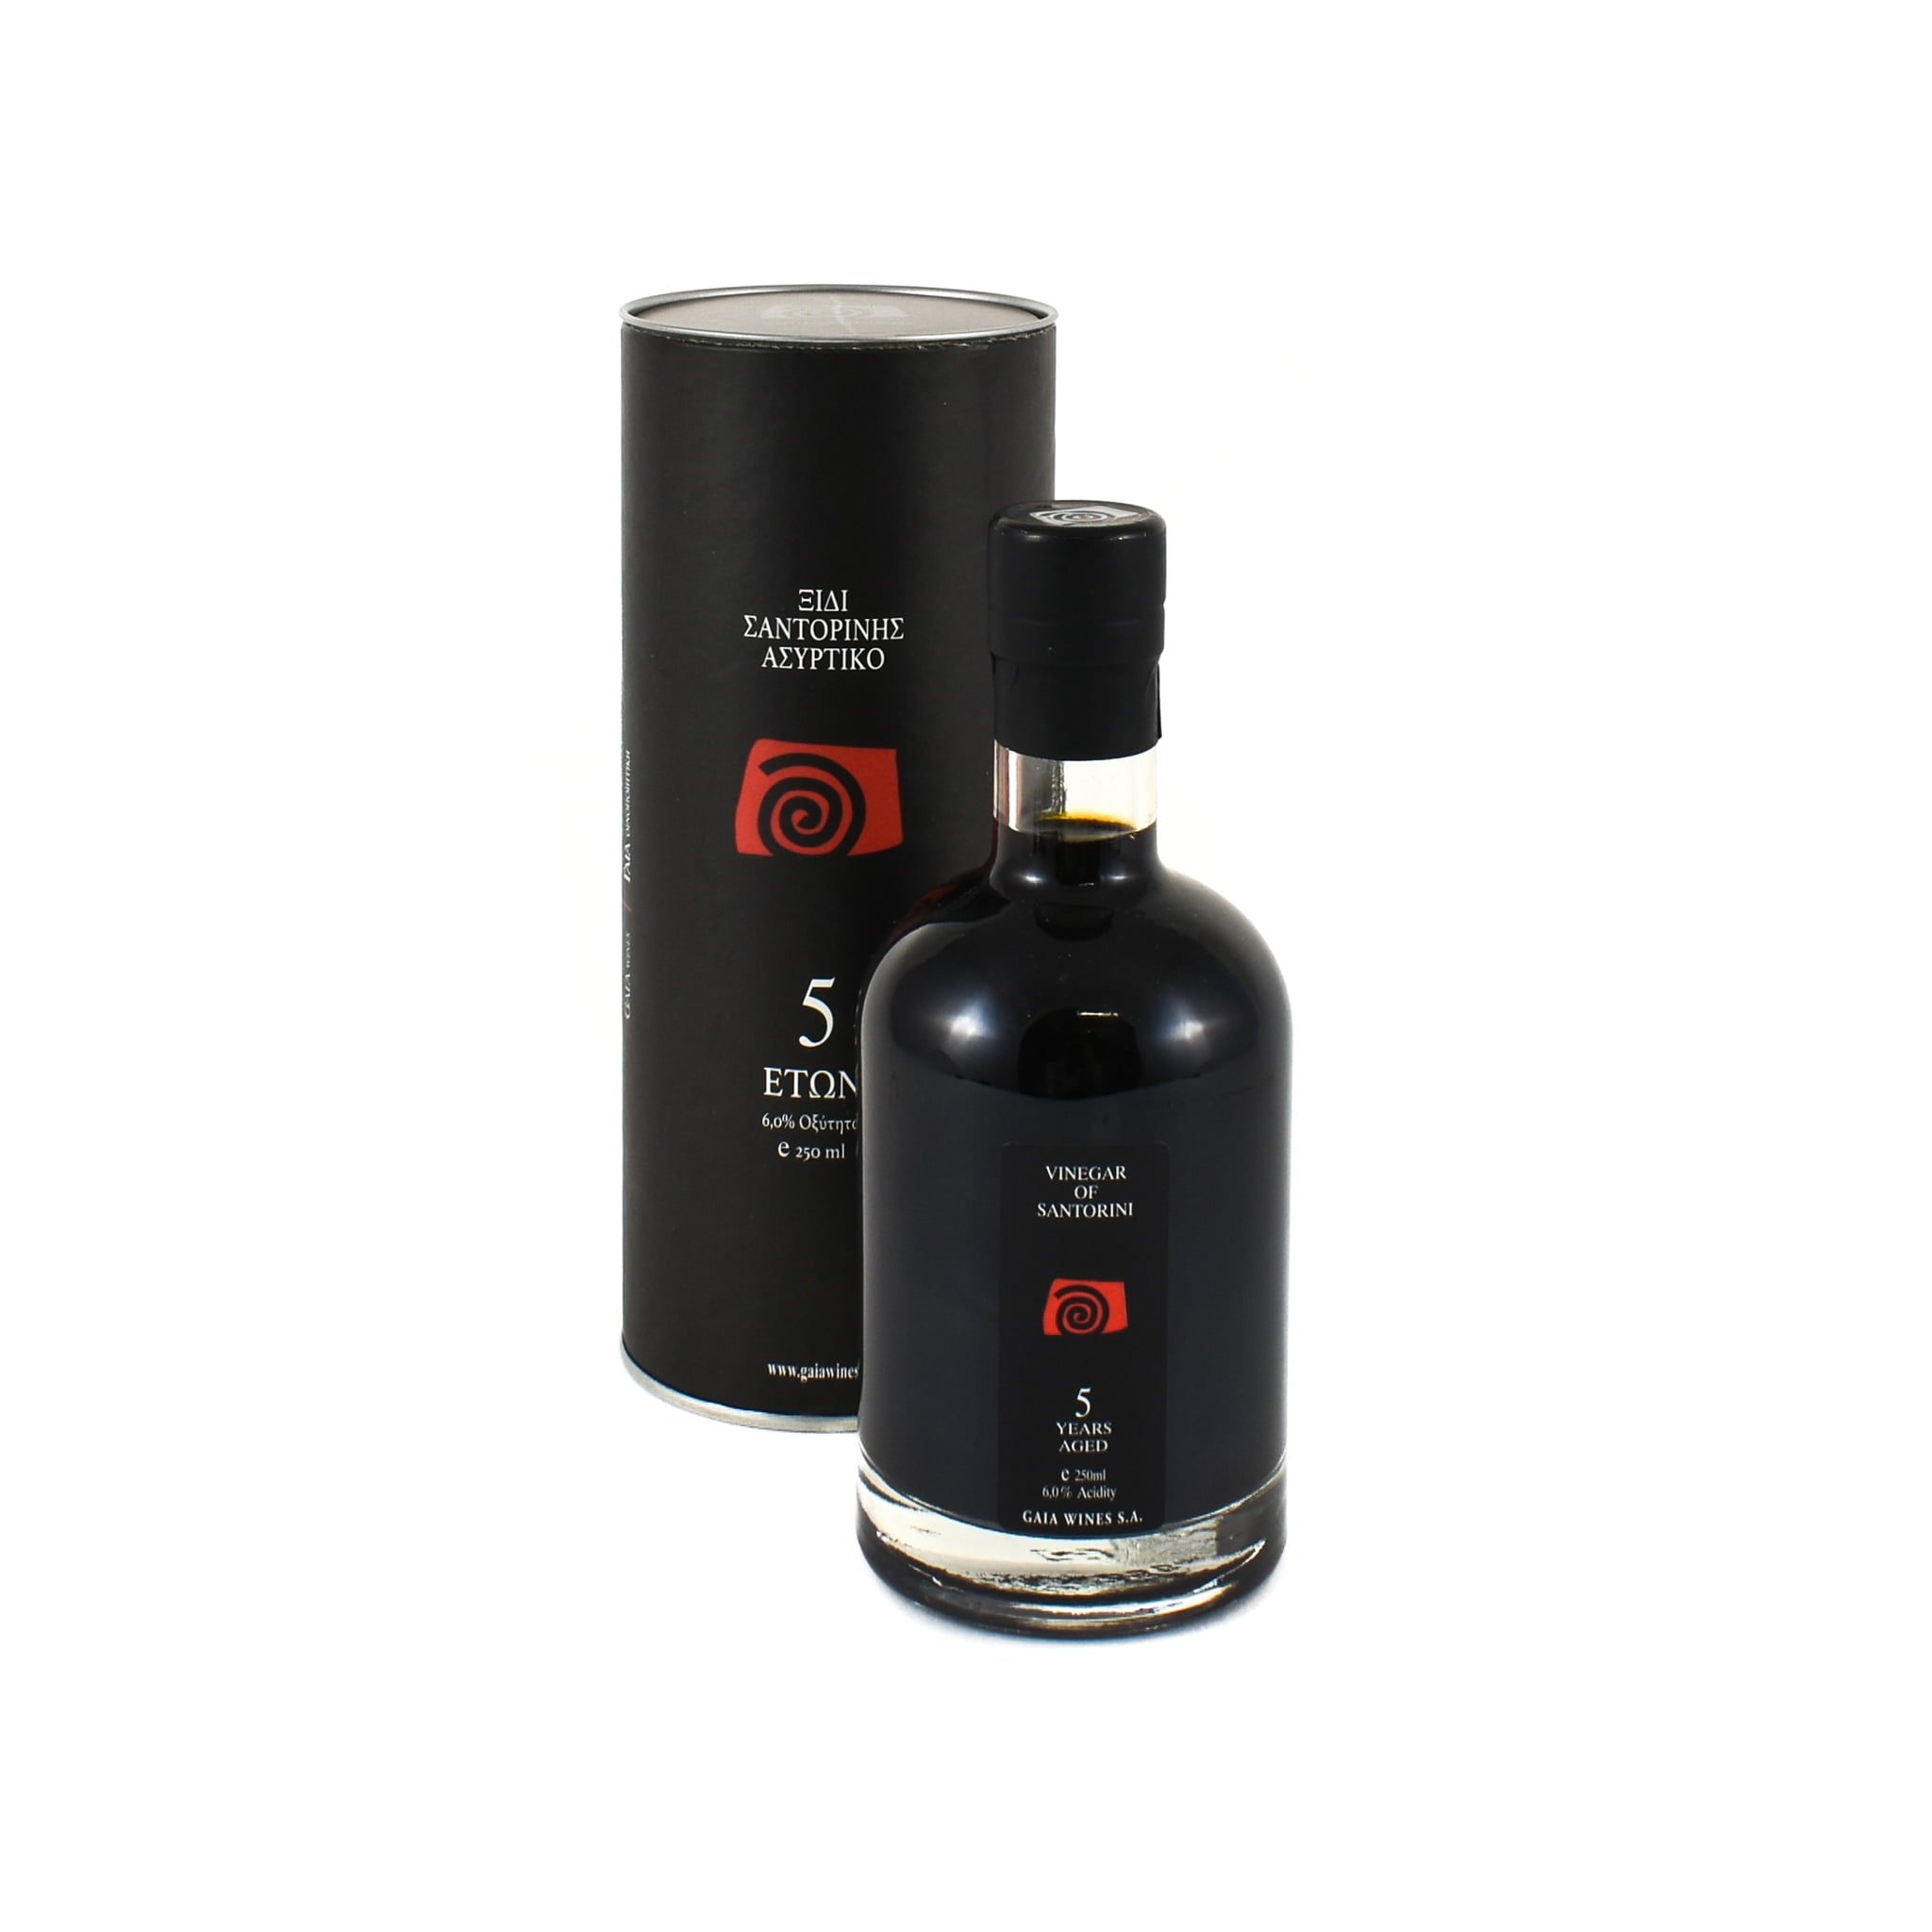 Gaia Vinegar Of Santorini 5 Year Aged 250ml